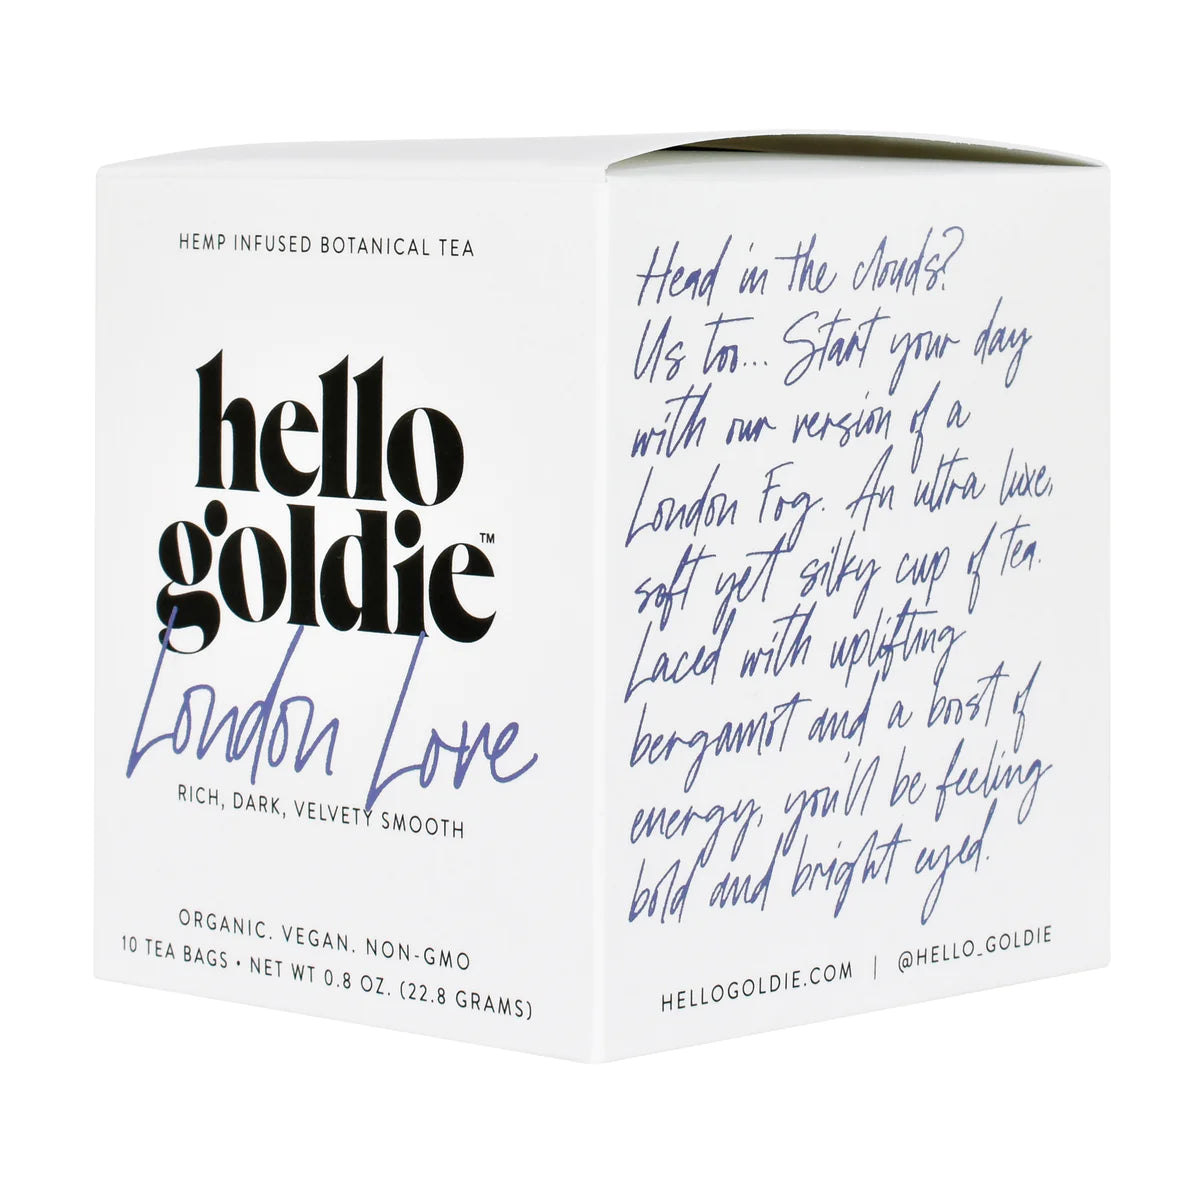 Hello Goldie London Love botanical tea, 10/box